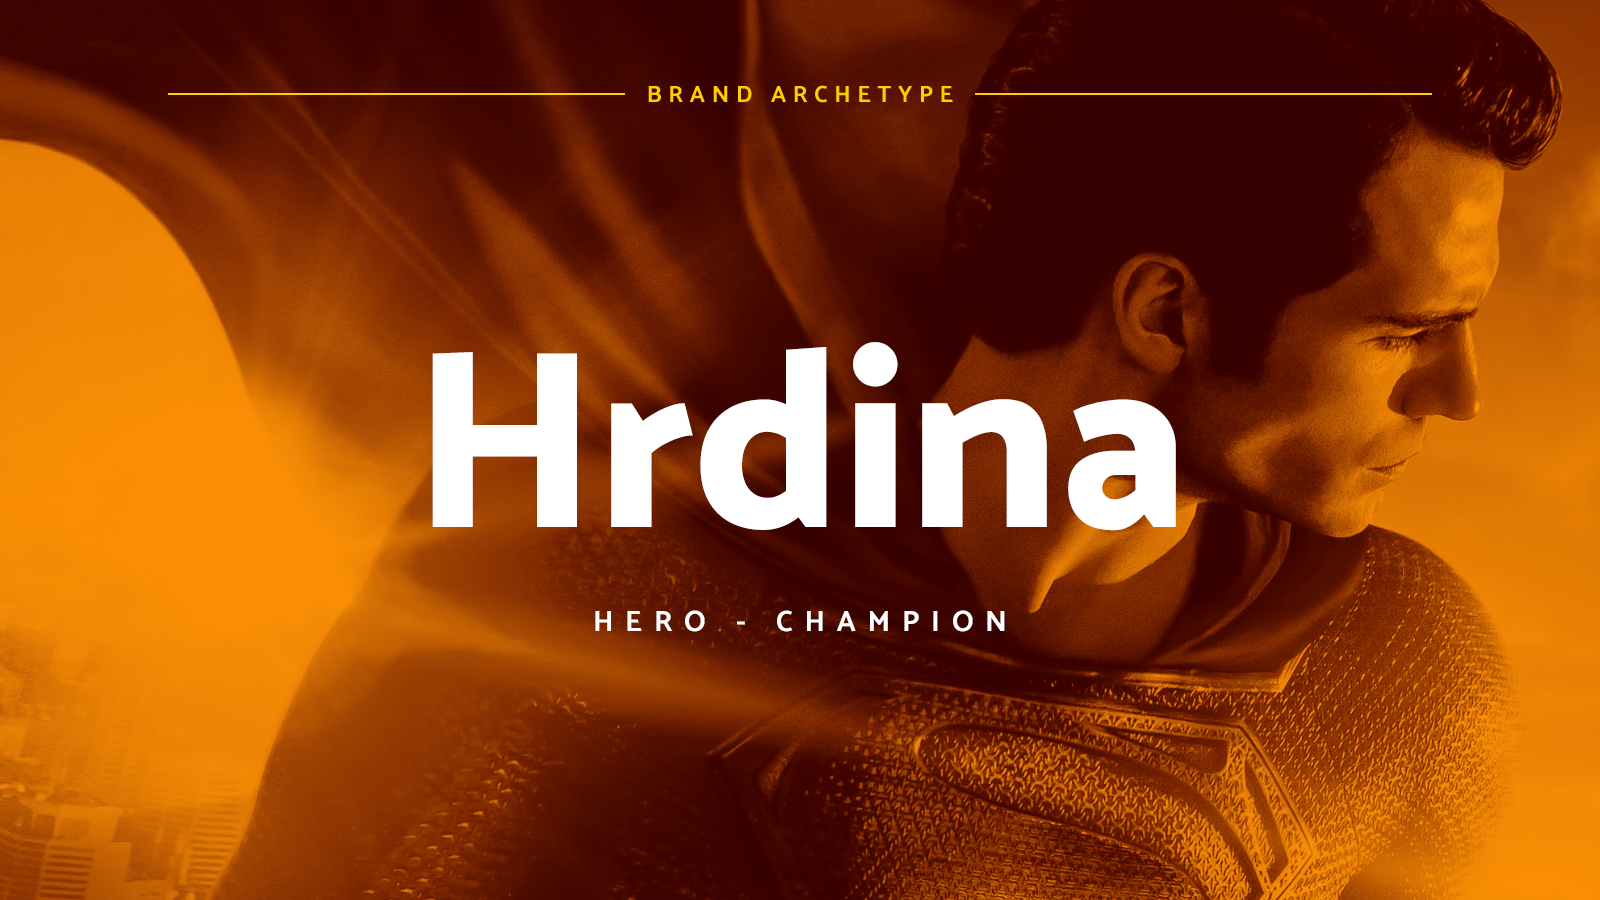 Brand archetypy: HRDINA